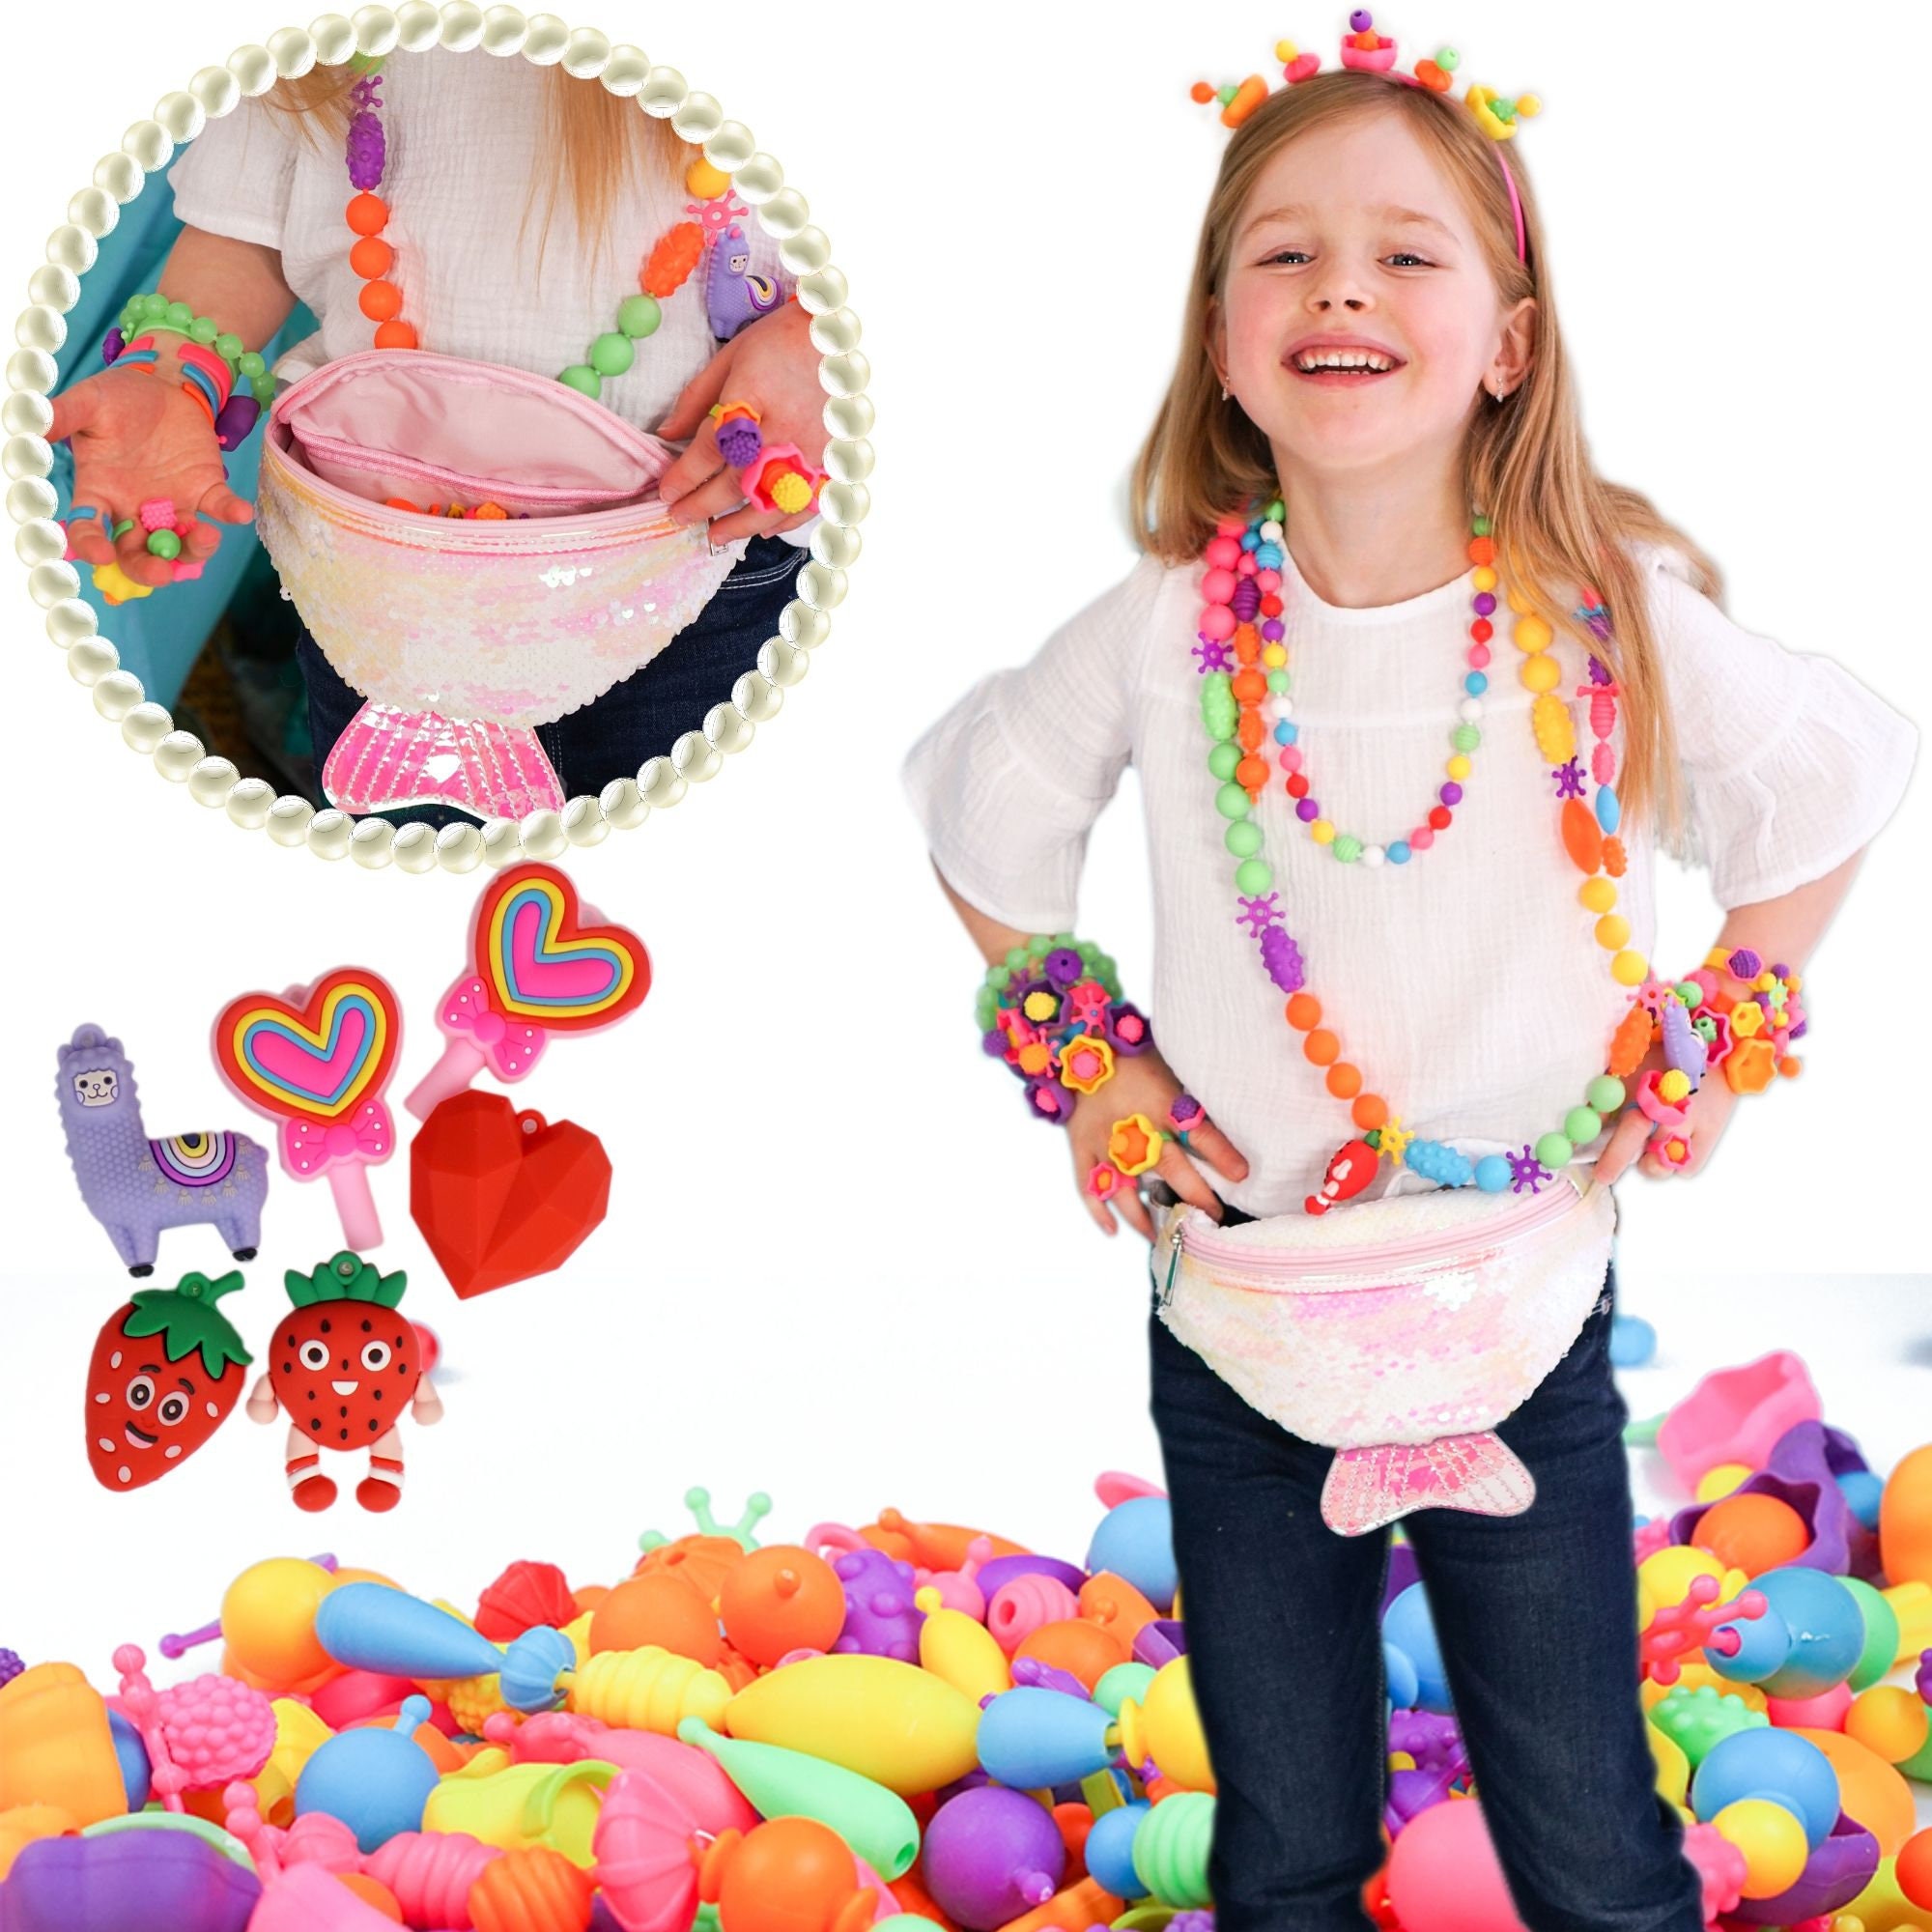 C 8mm Pony Beads, Jewelry Beads Hair Beads, Craft Beads Ponytail Beads, Kids  Beads, 50 Beads per Pack 